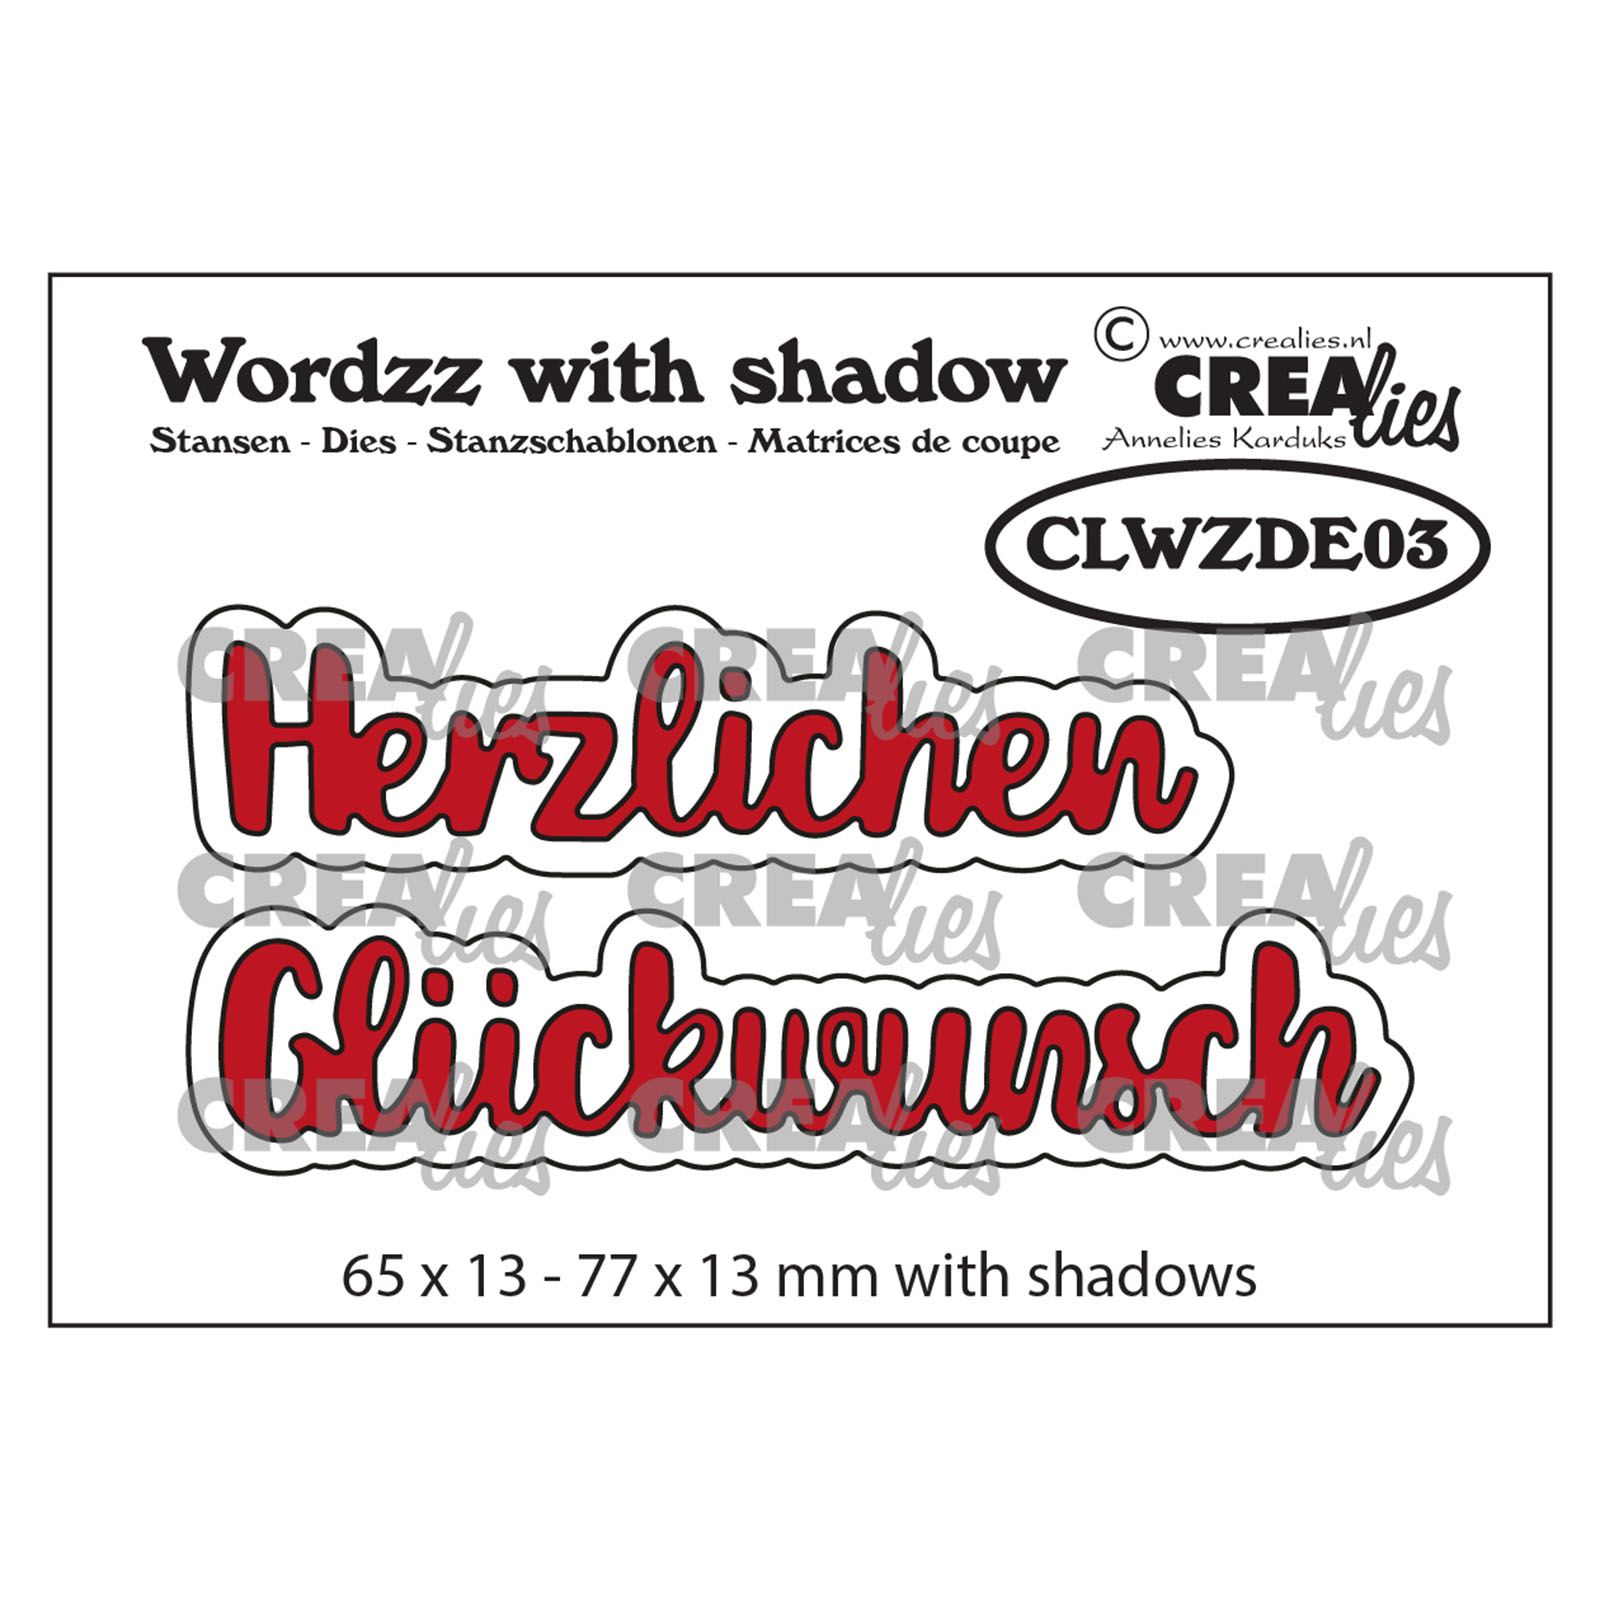 Crealies • Wordzz with shadow snijmal "Herzlichen Glückwunsch"